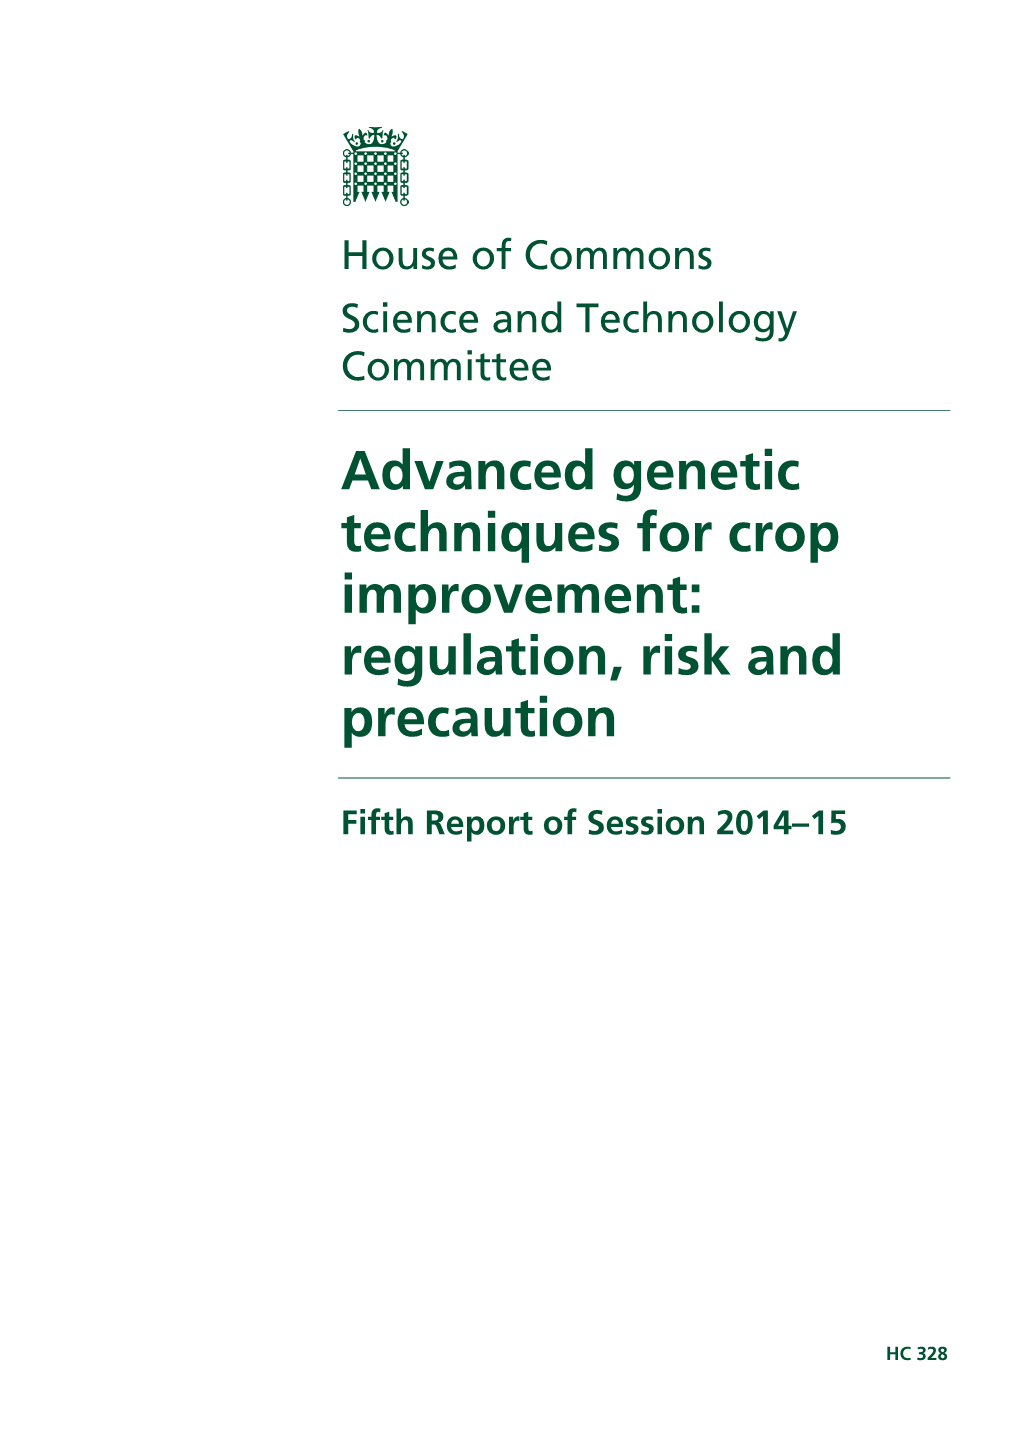 Advanced Genetic Techniques for Crop Improvement: Regulation, Risk and Precaution